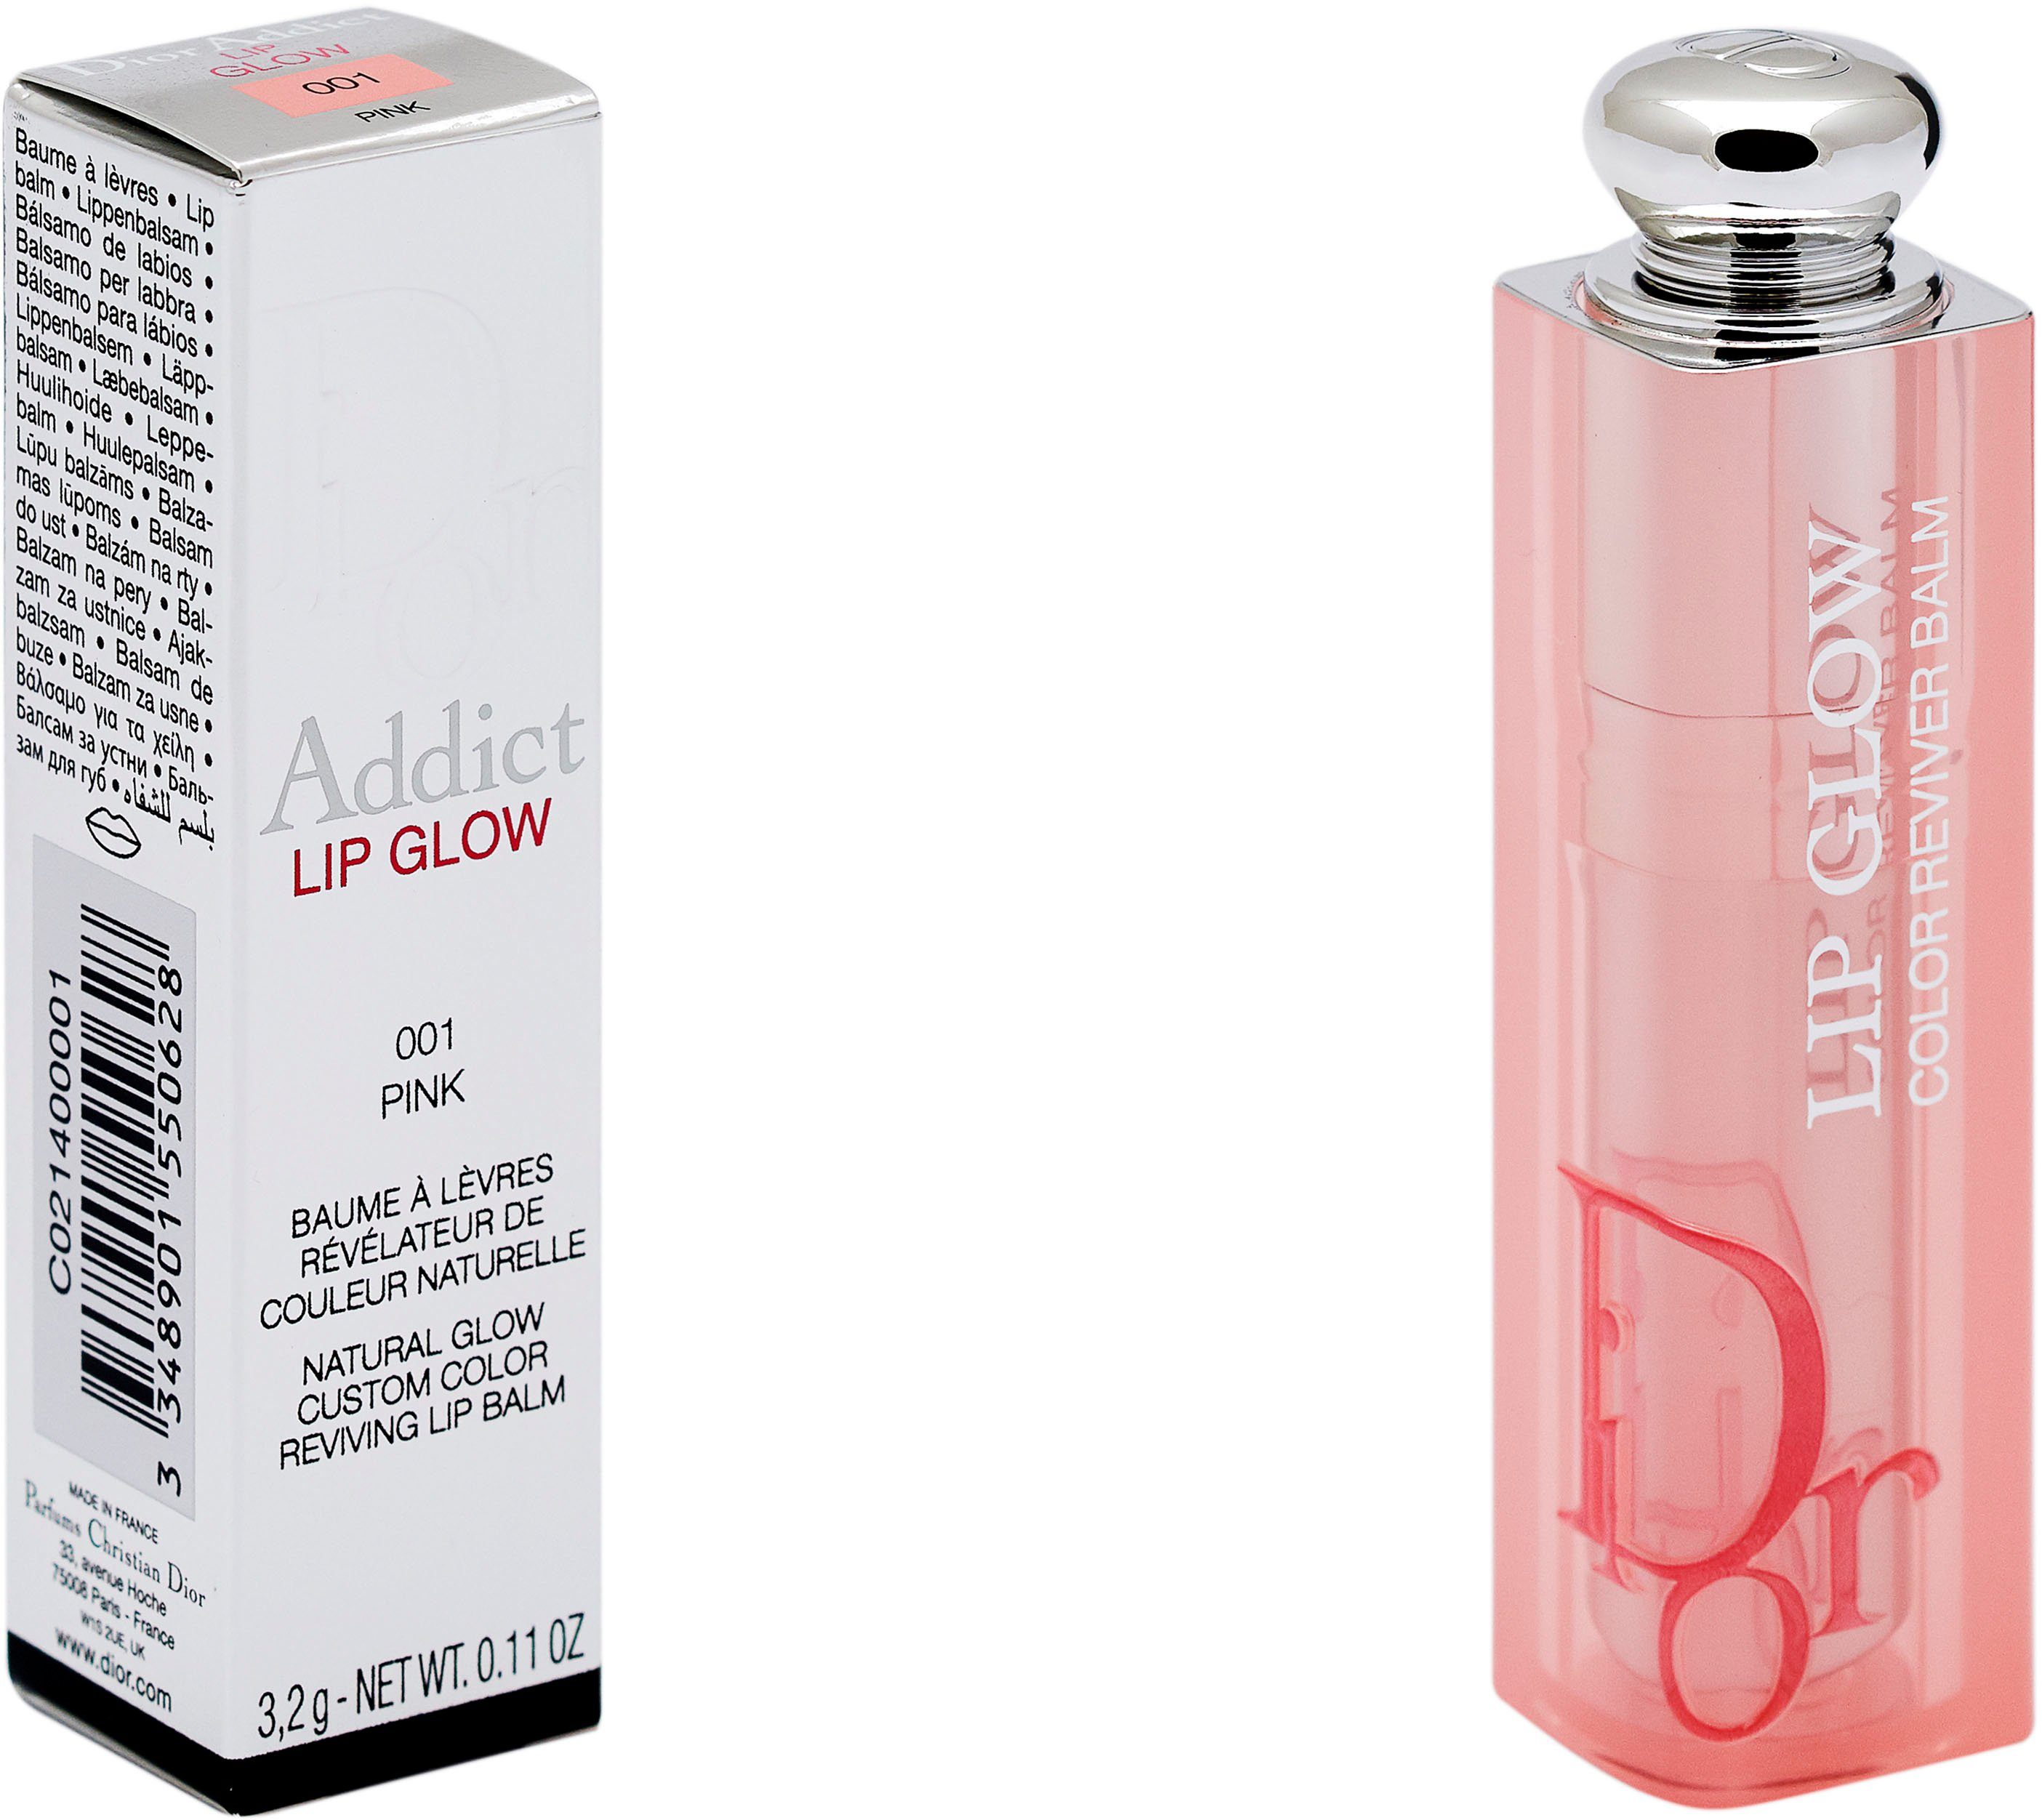 001 Pink Dior Lippenbalsam Lip Glow Addict Dior